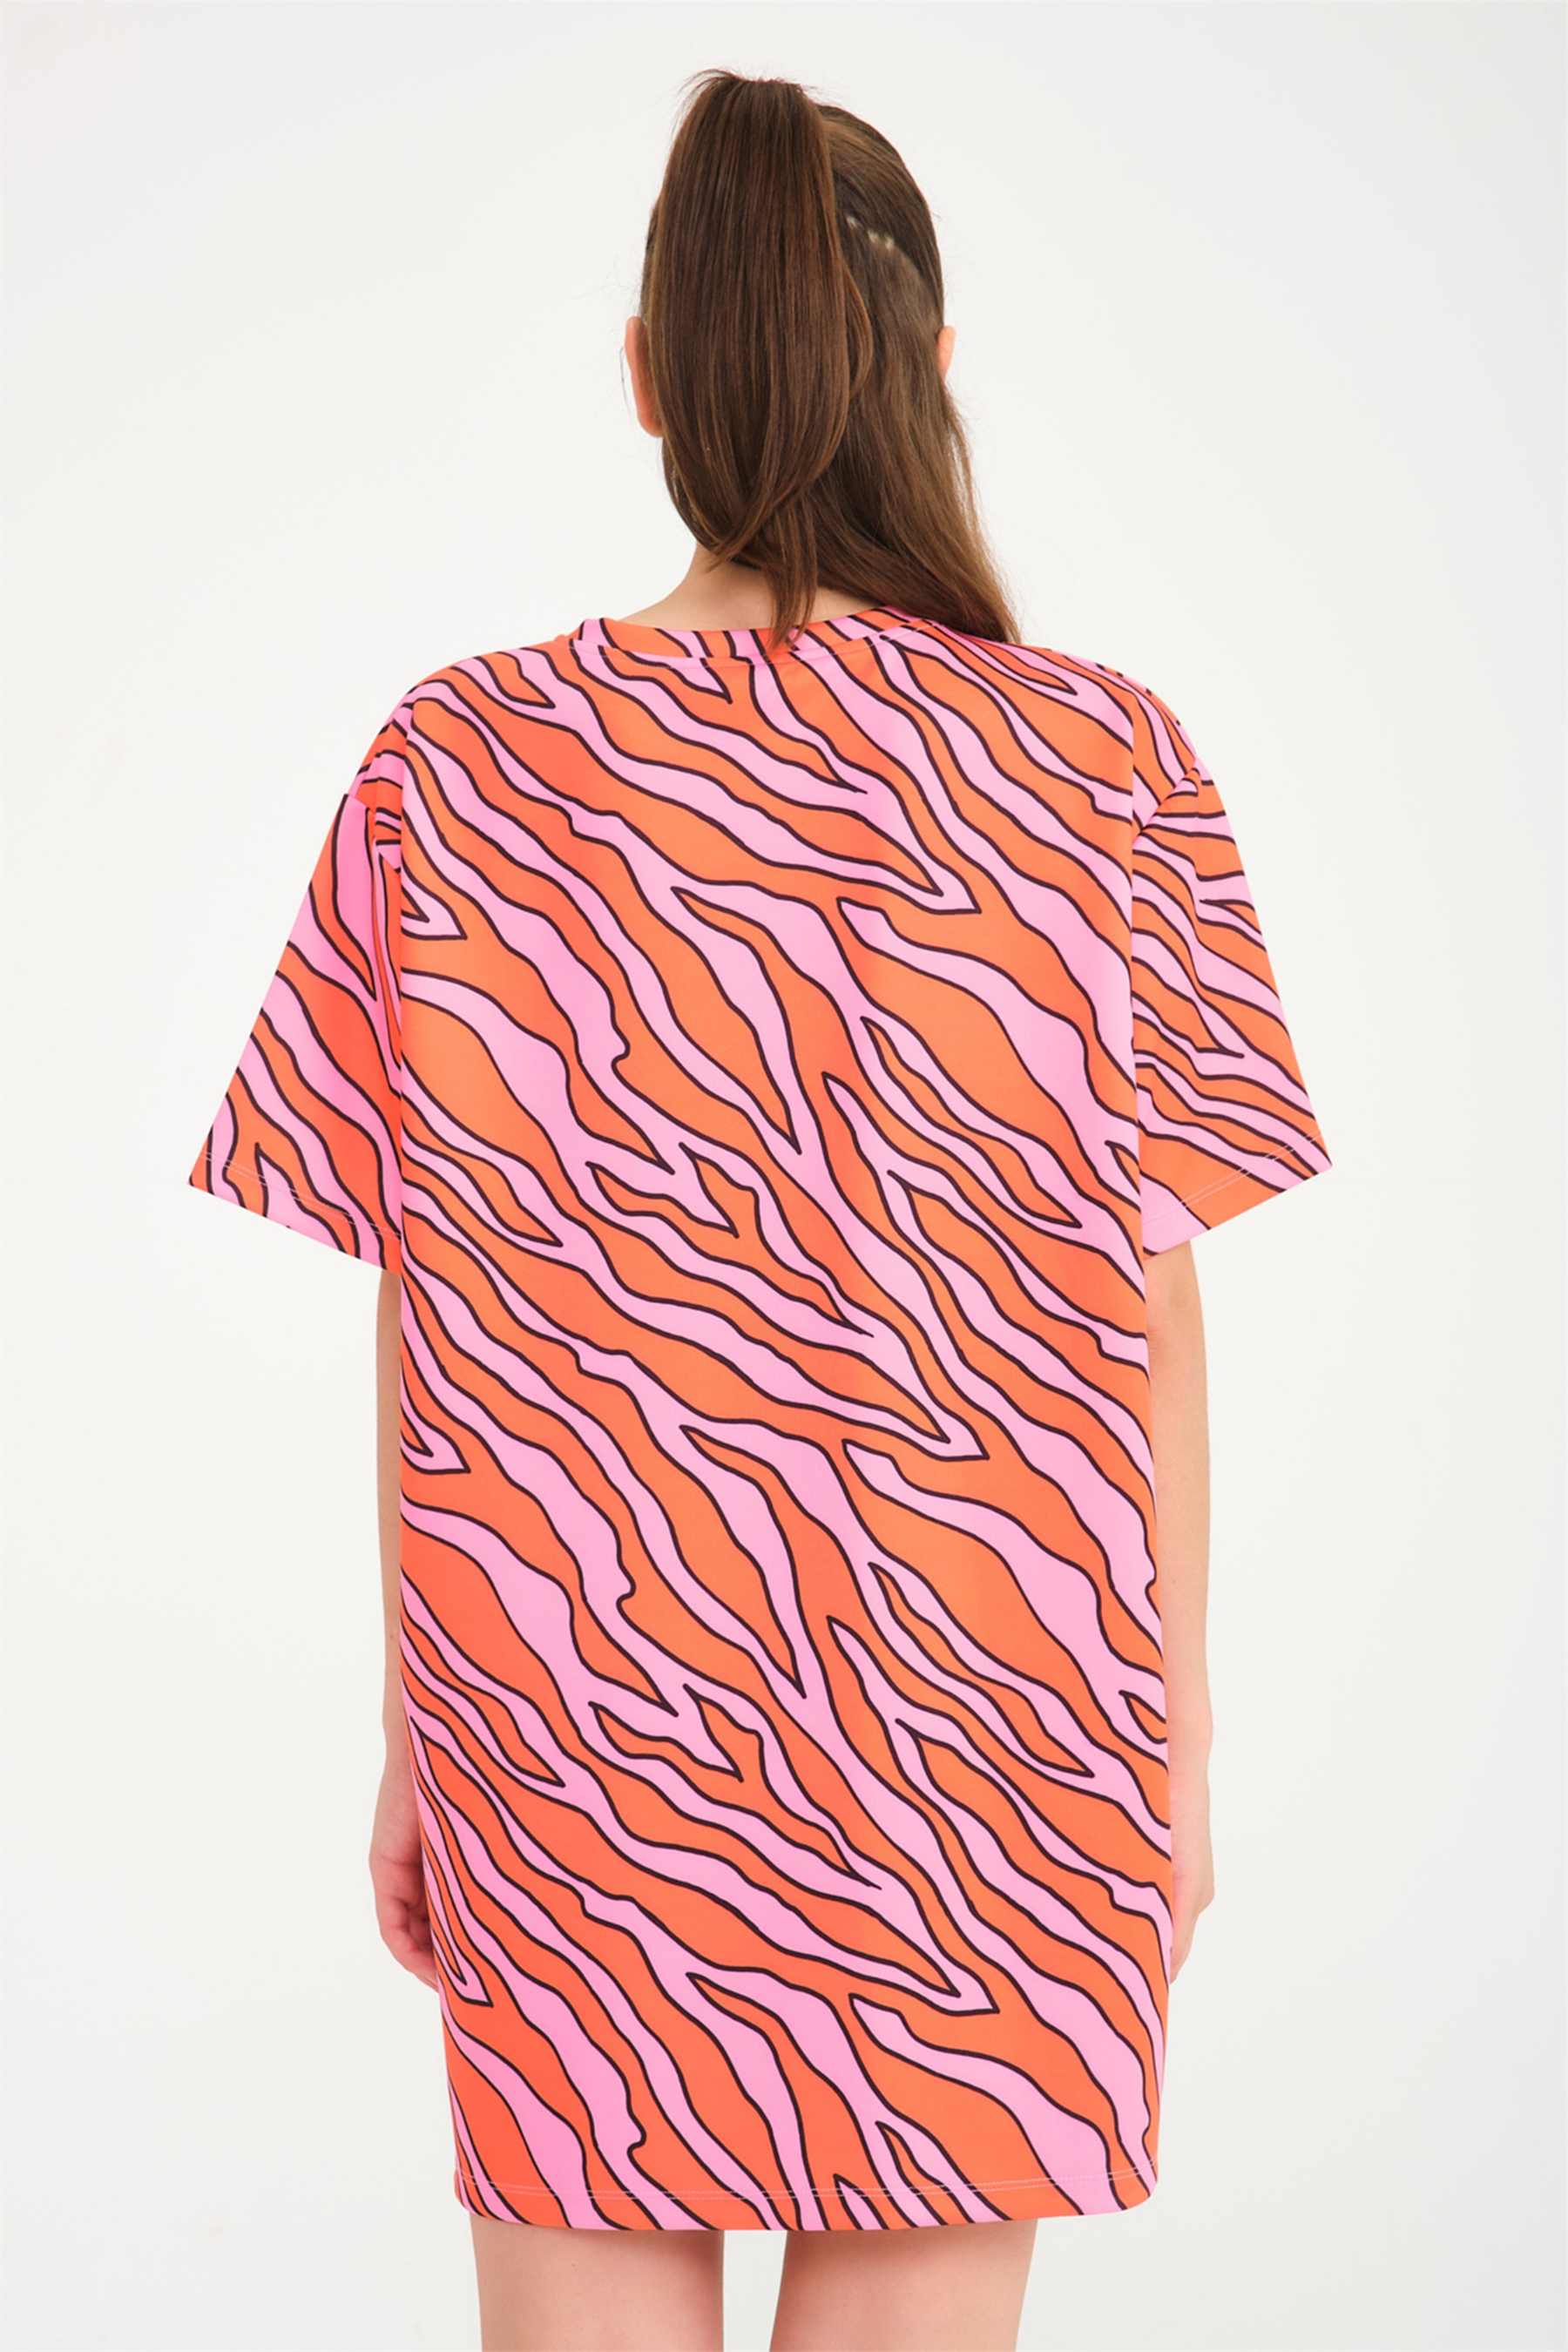 Ala X Fineapple Pembe Turuncu Zebra T-shirt Elbise